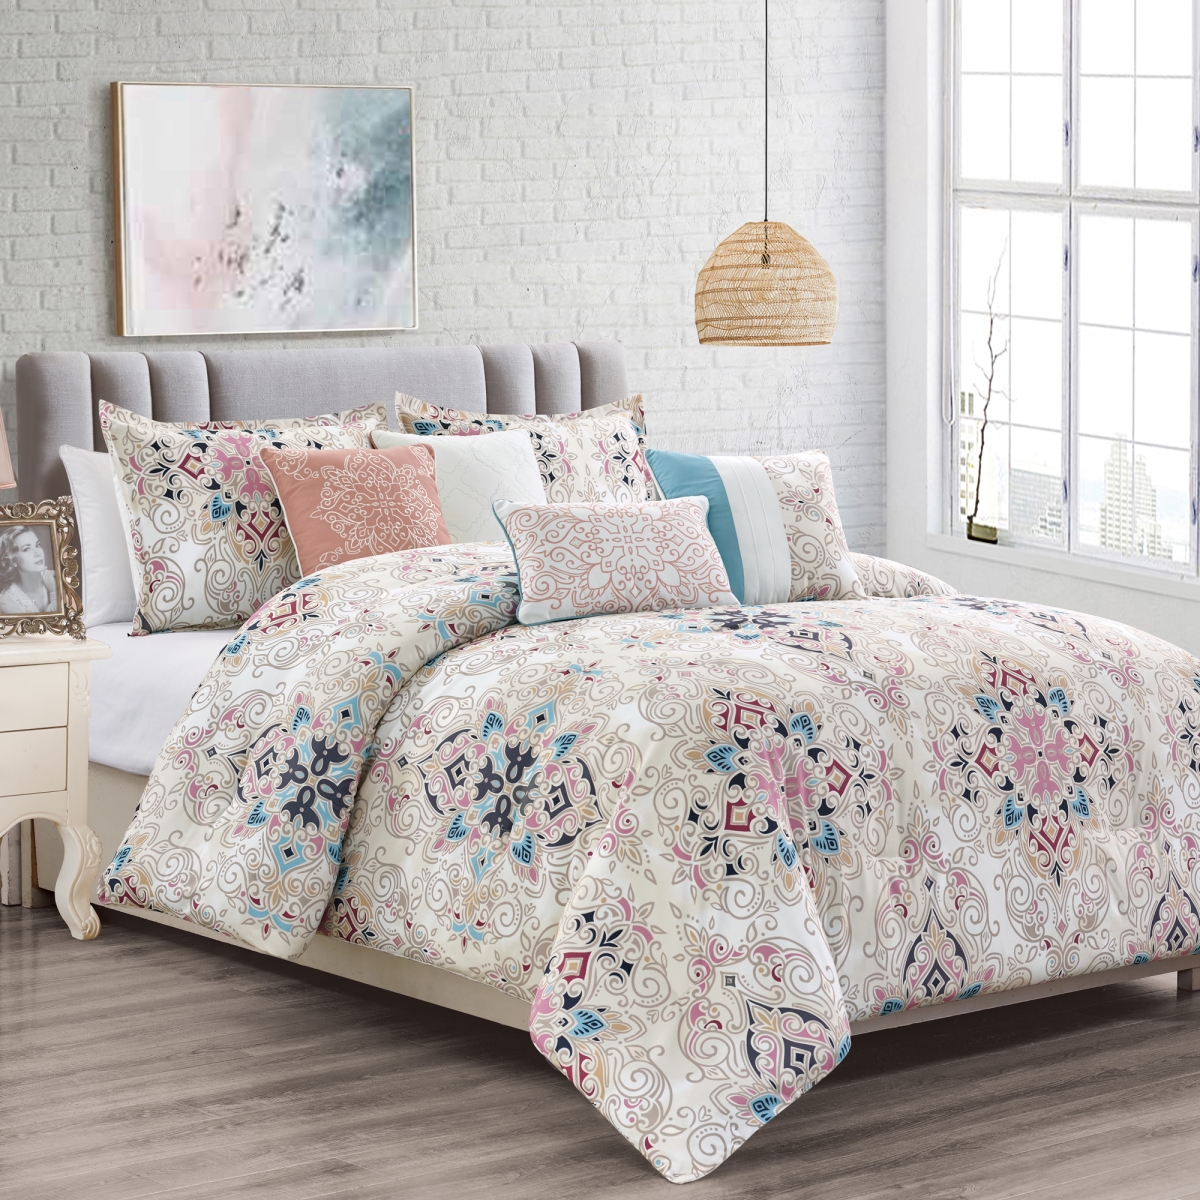 21787q Quiana Comforter Set, Multi Color - Queen Size - 7 Piece